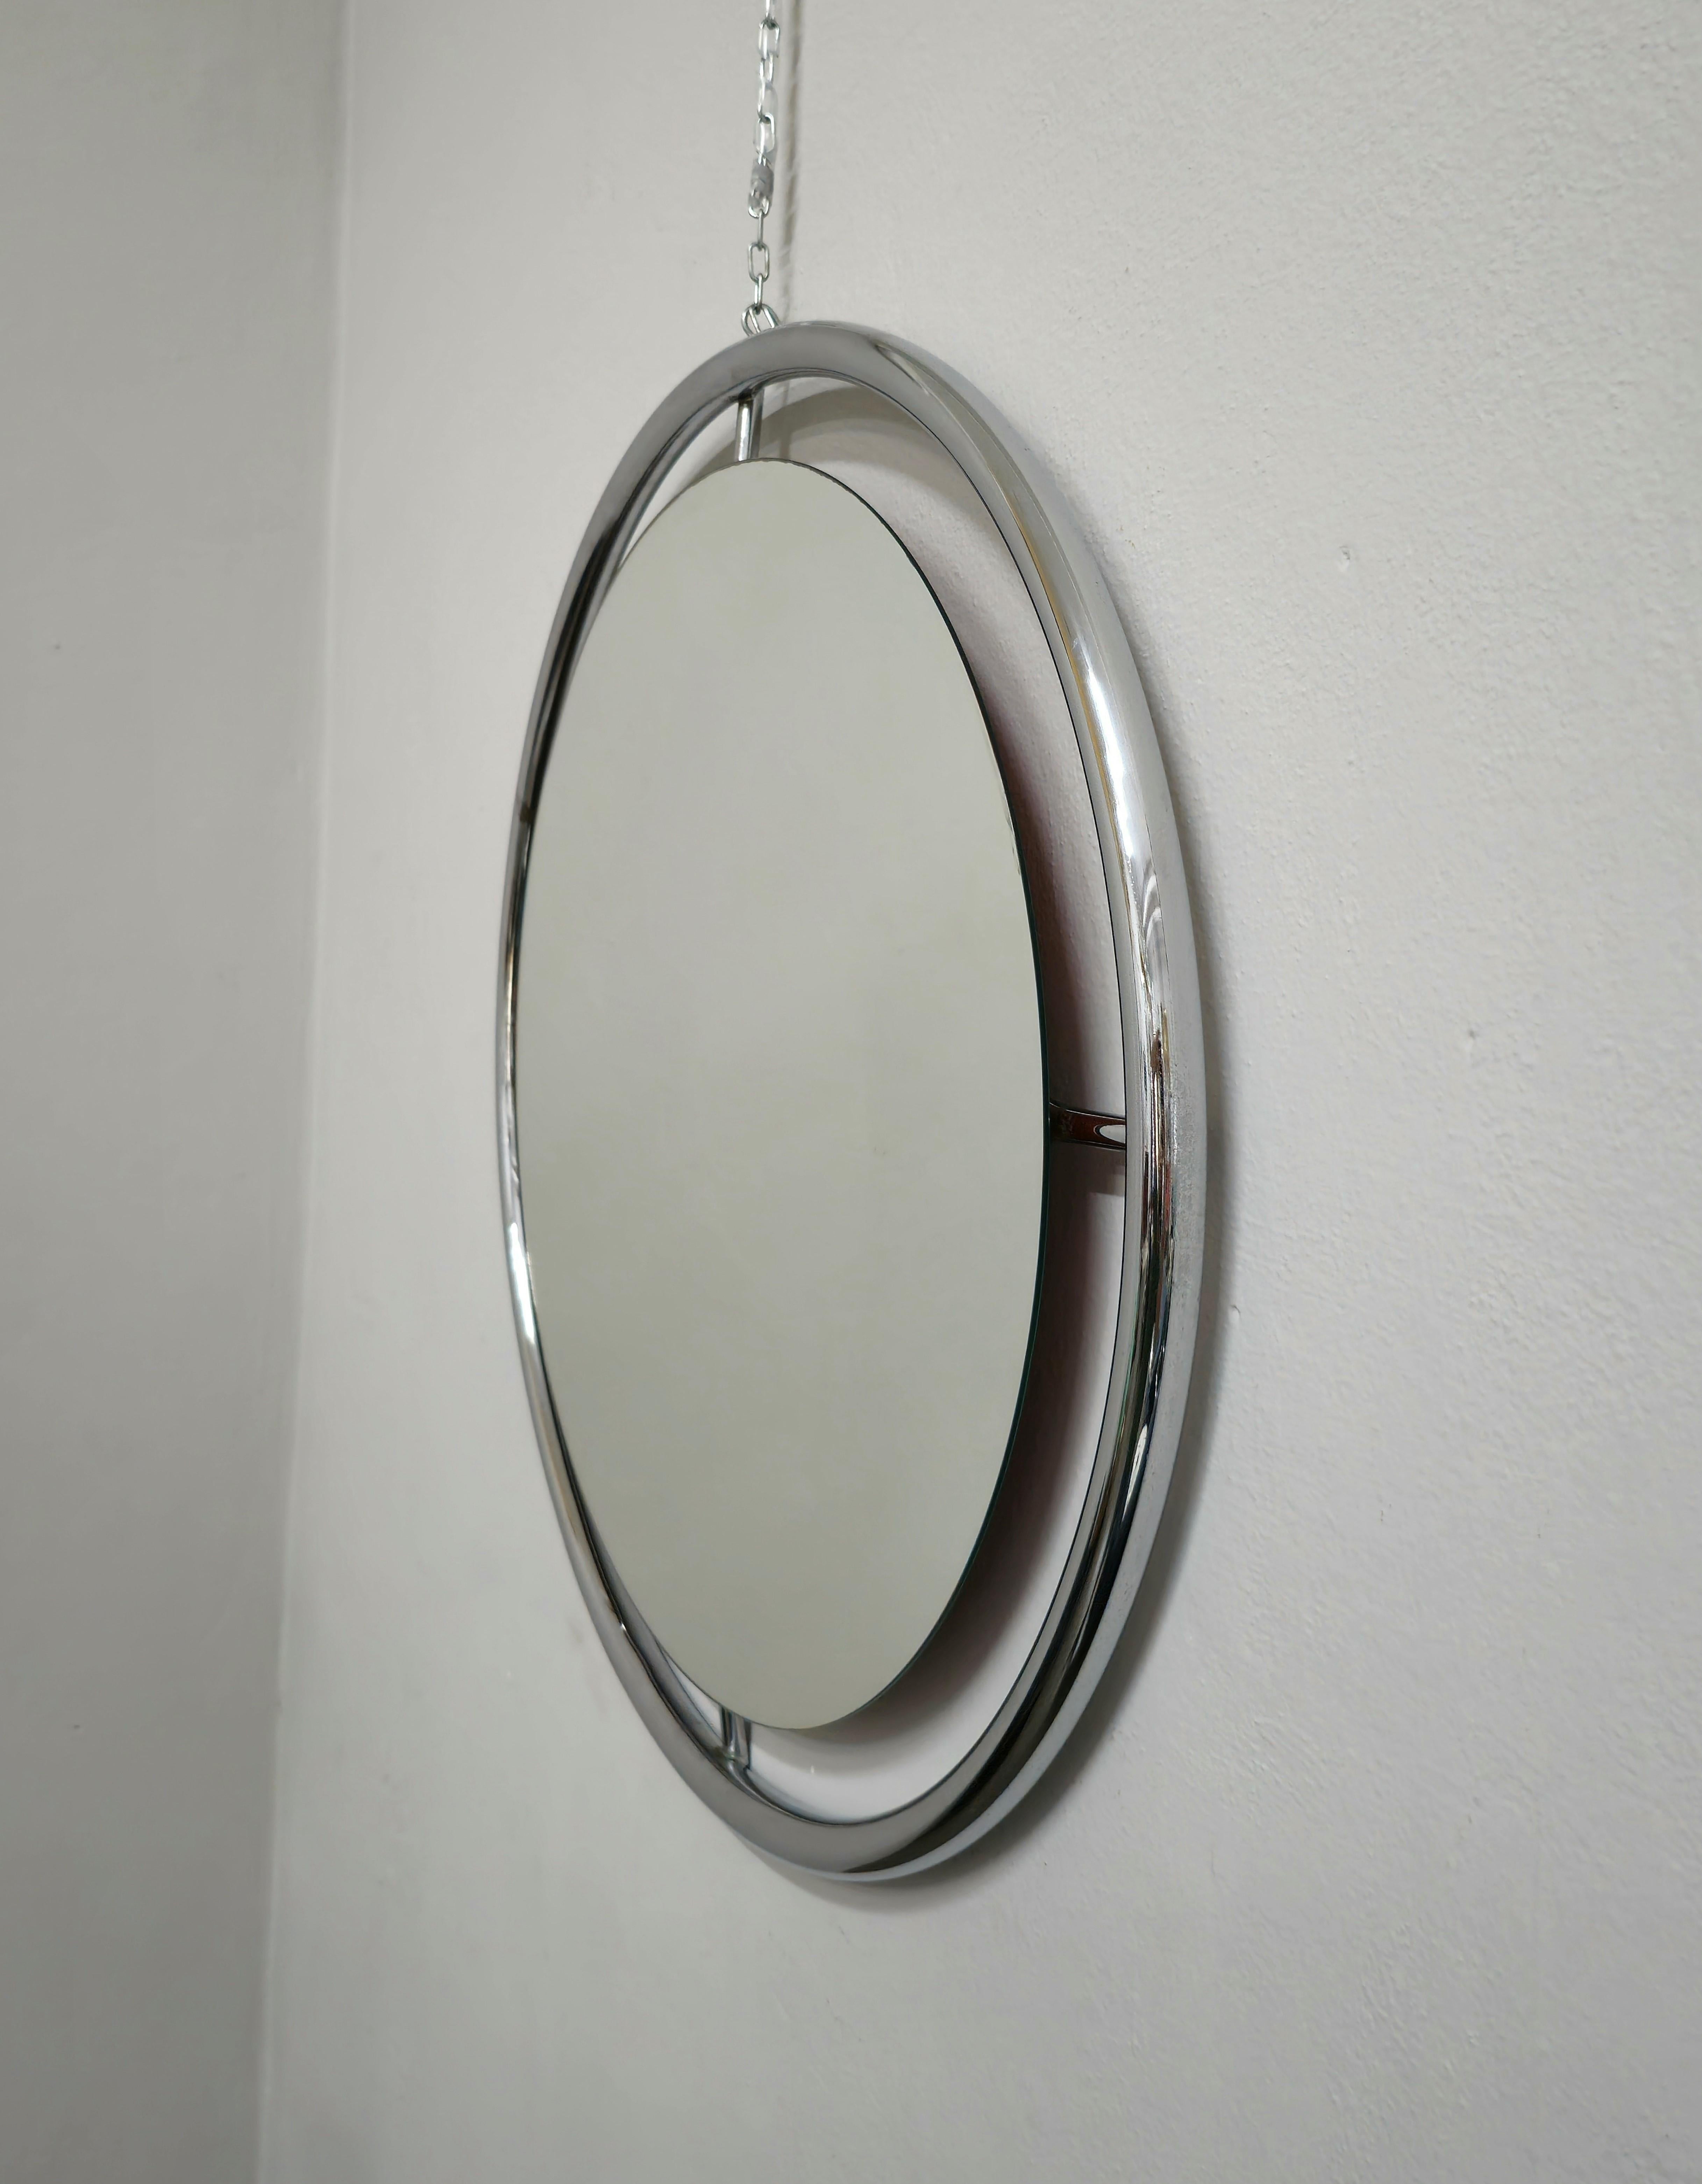 20th Century Wall Mirror Chromed Metal Circular Midcentury Modern Italian Design 1970s For Sale